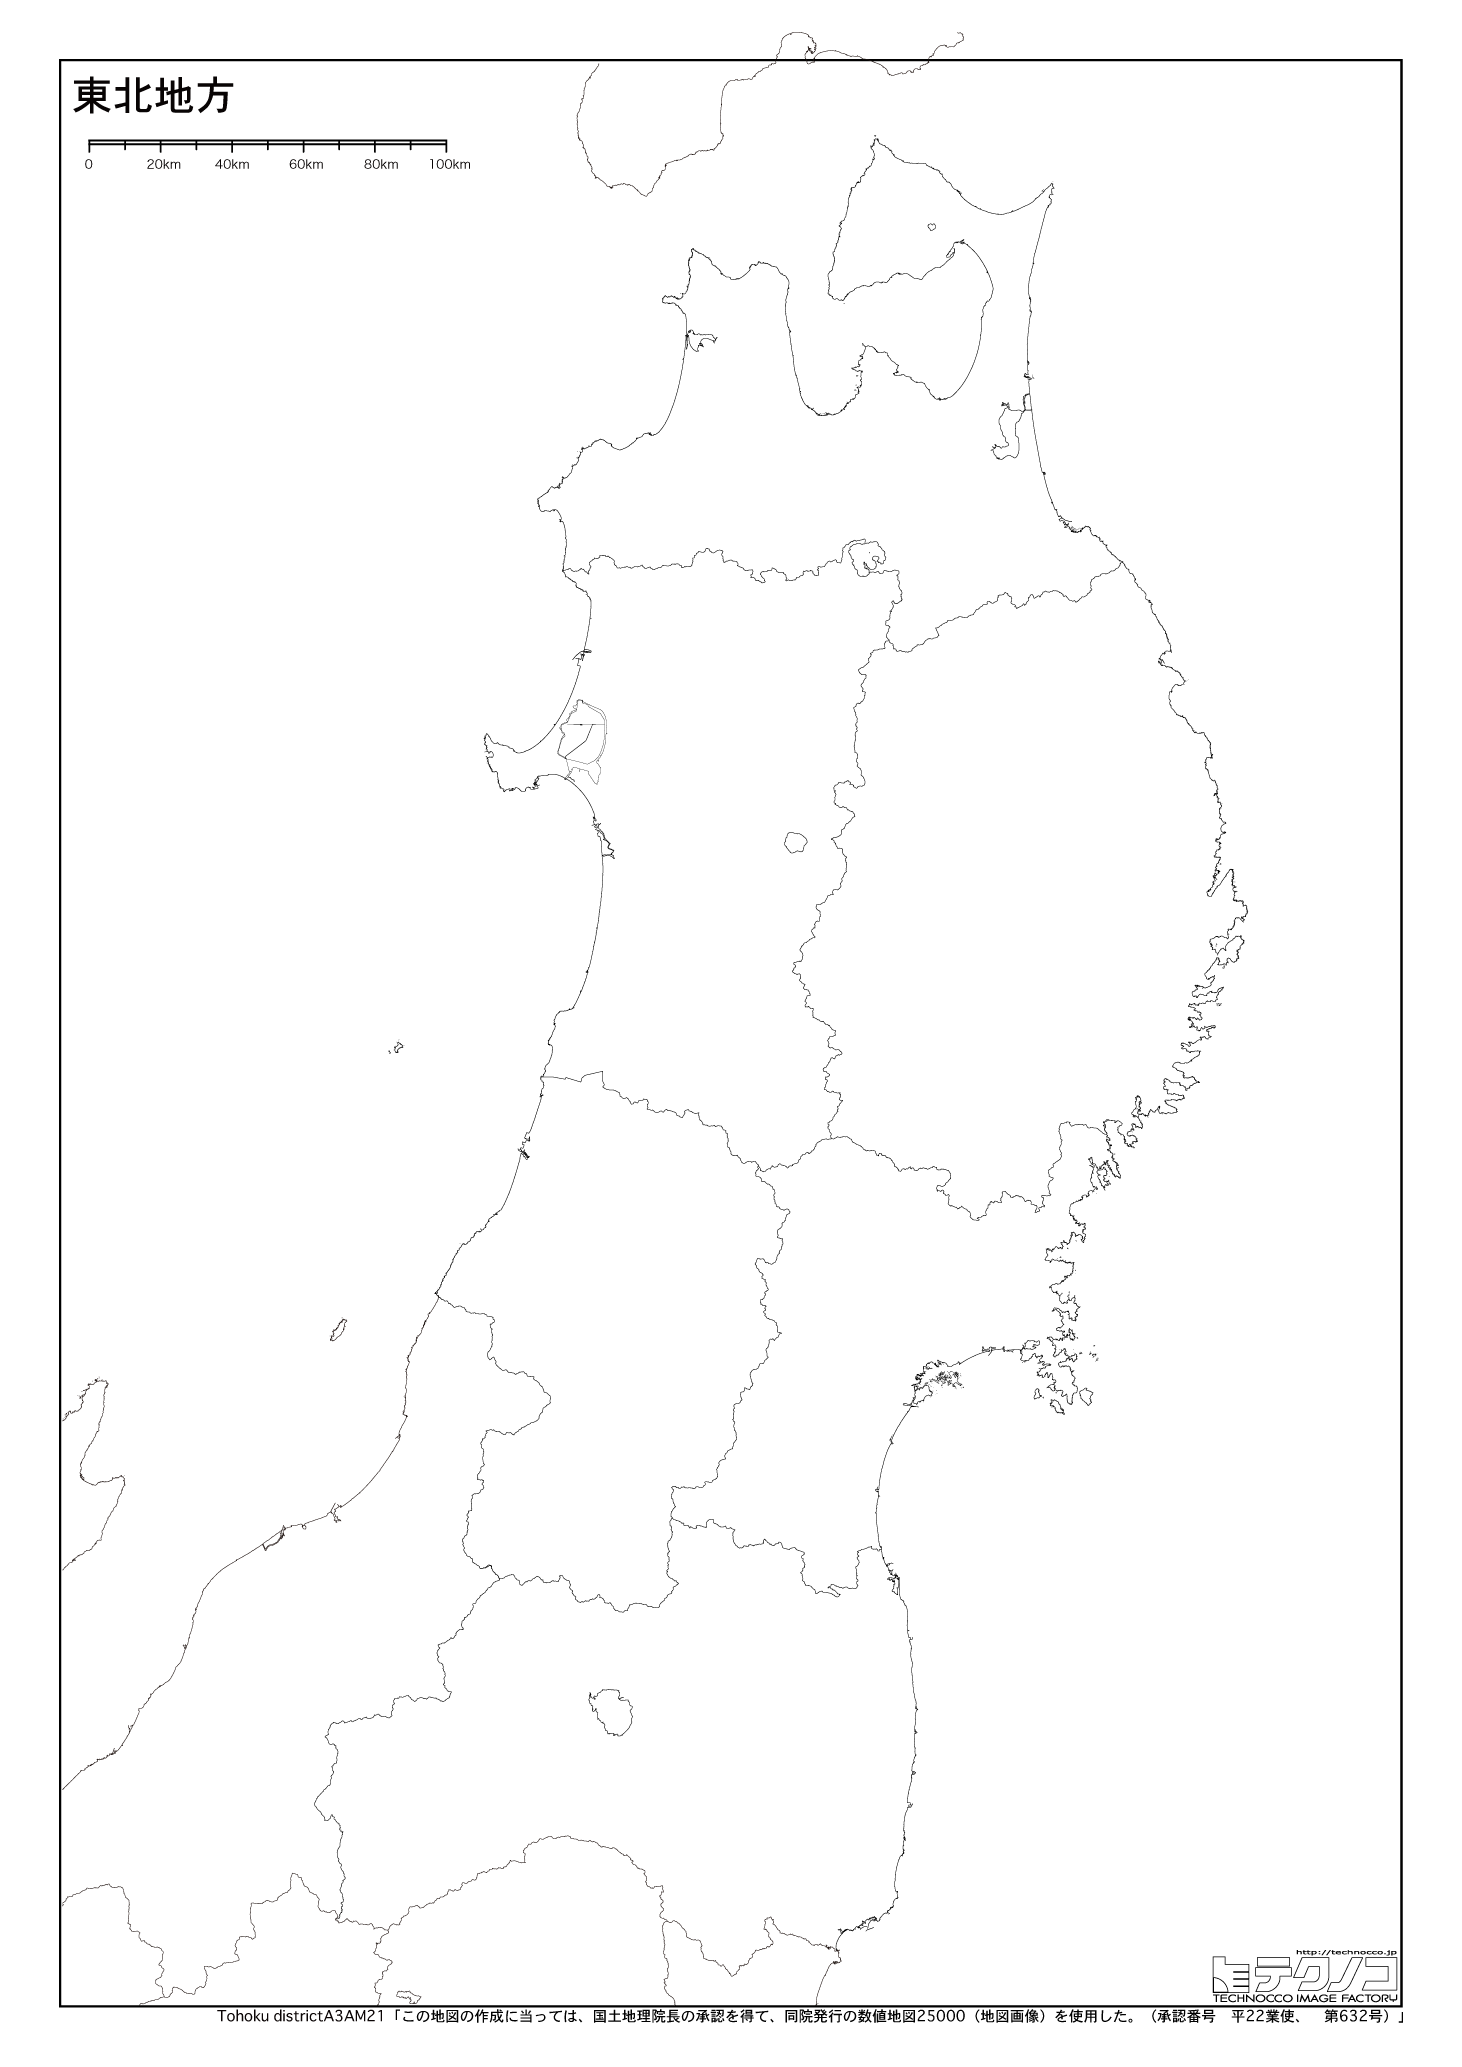 東北地方の白地図